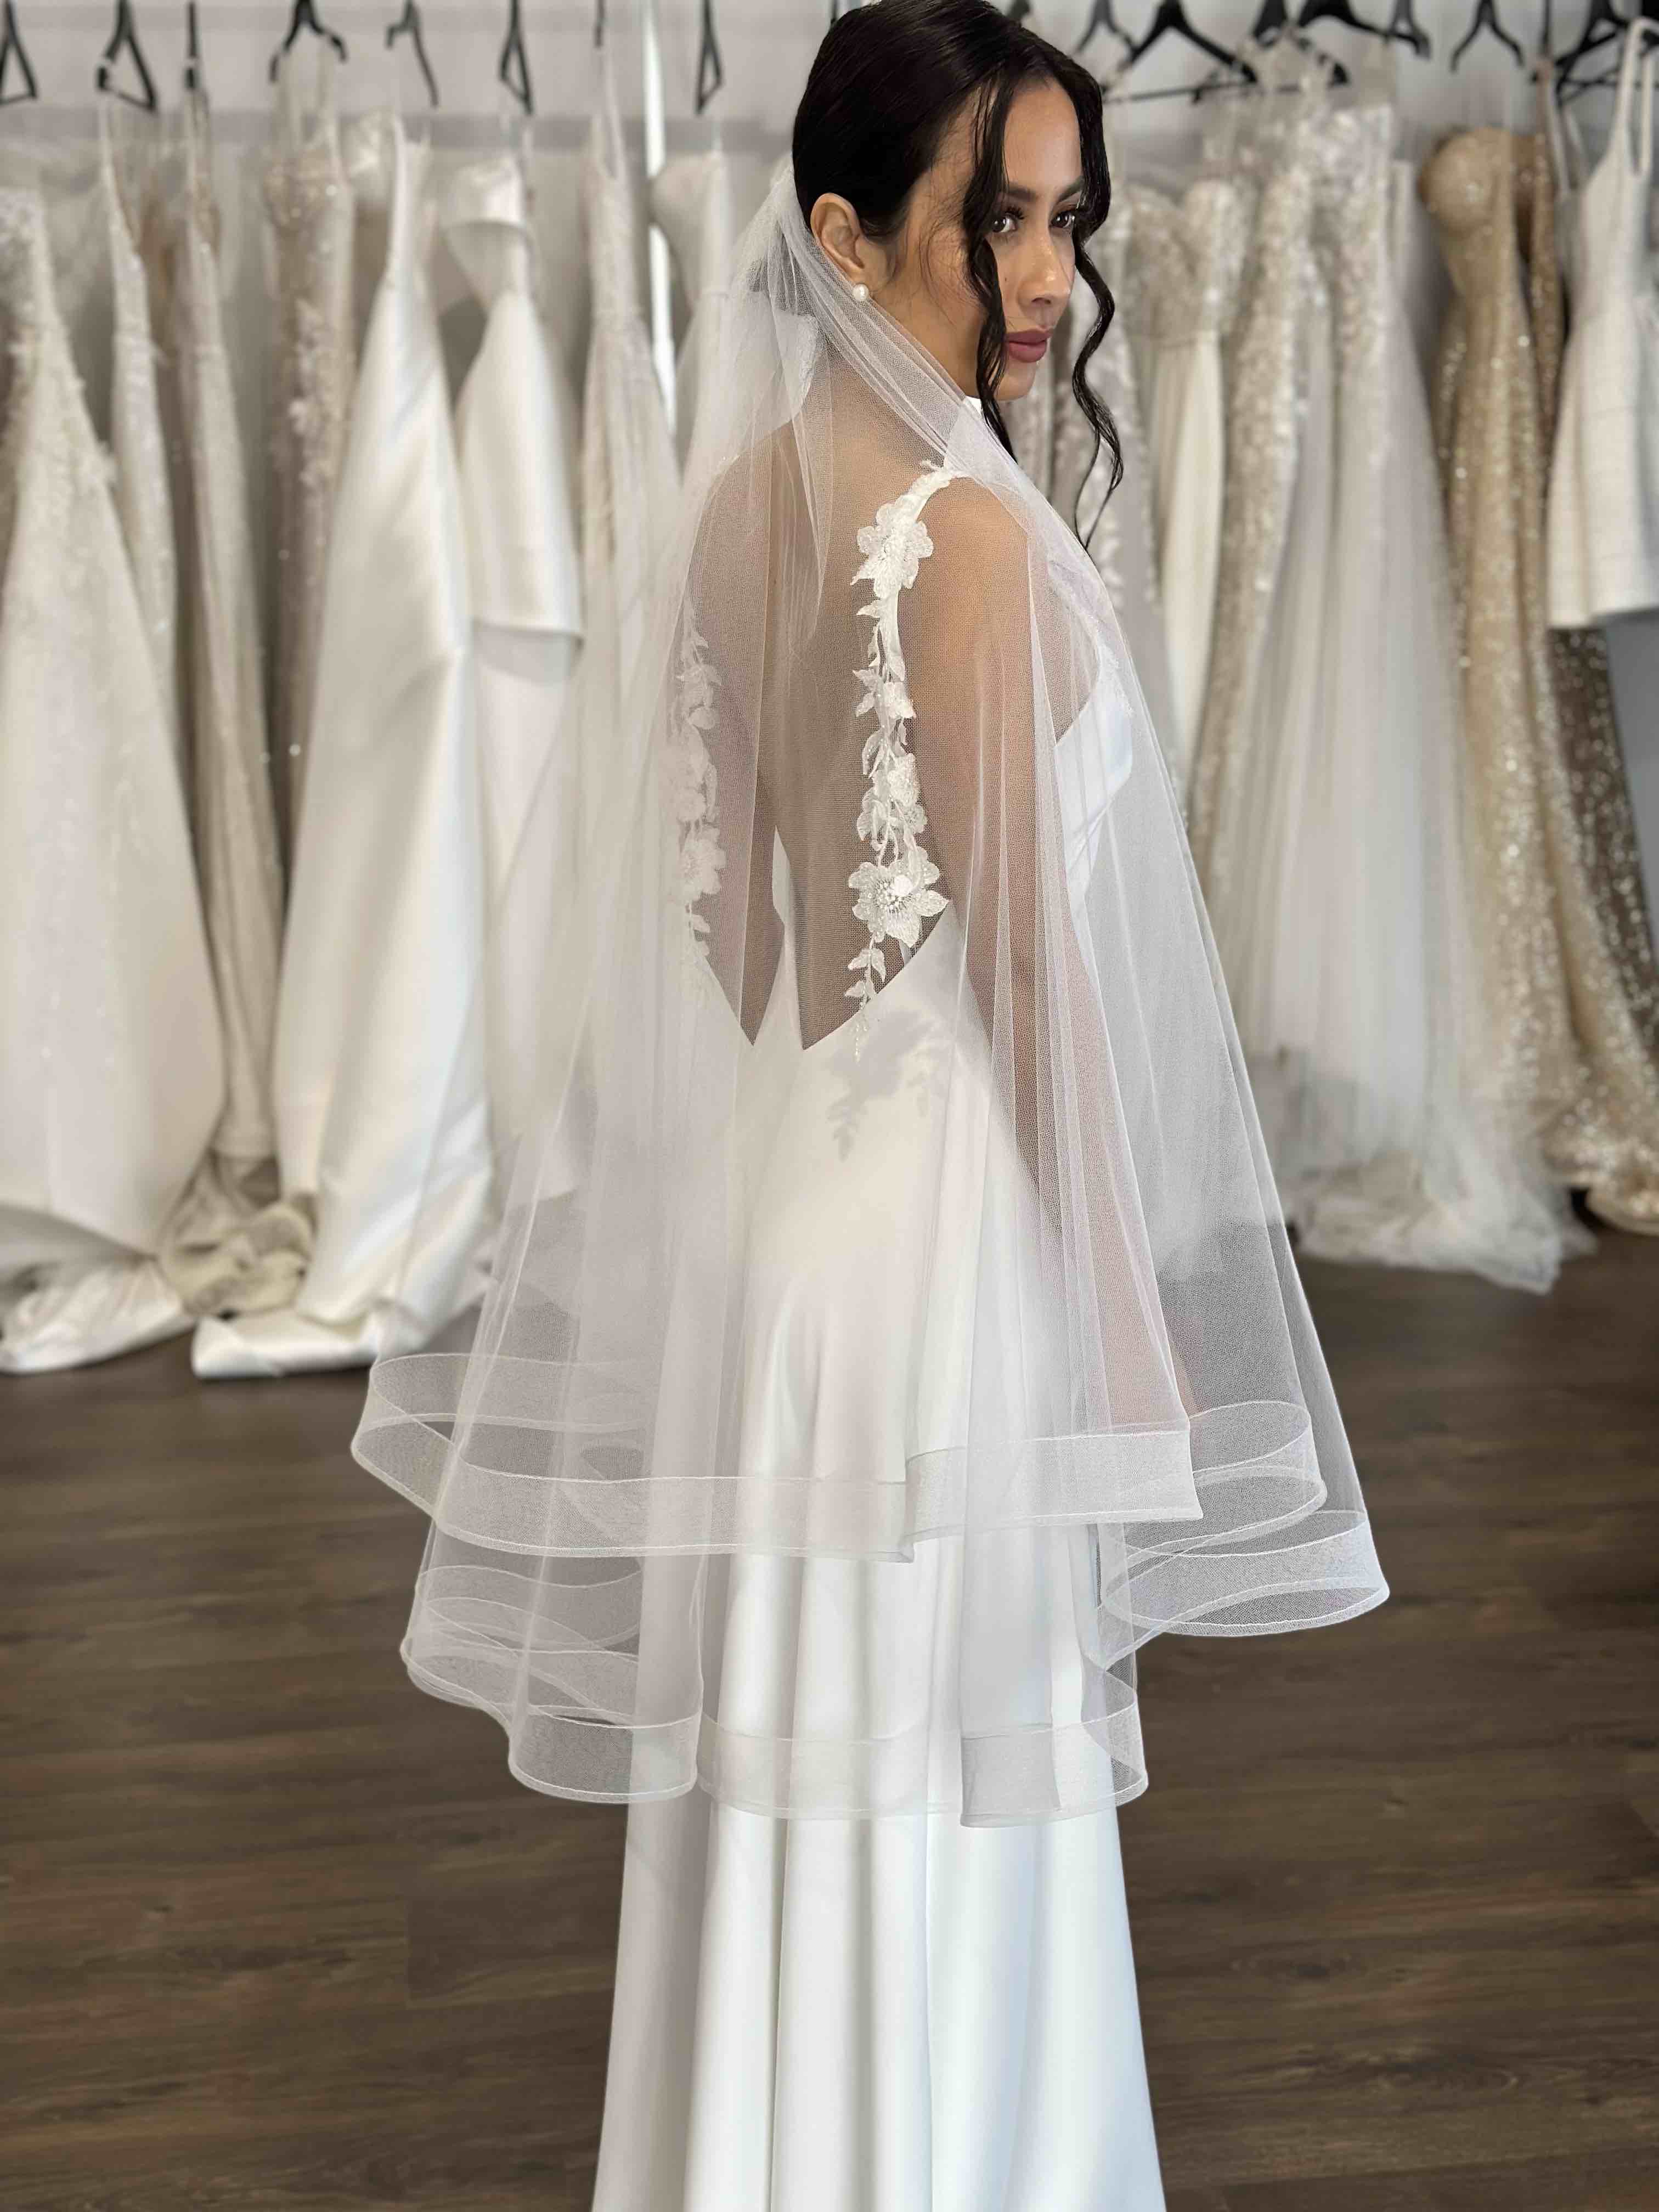 Hana by Euphorie  Mini Wedding Dresses & Wedding Reception Gowns